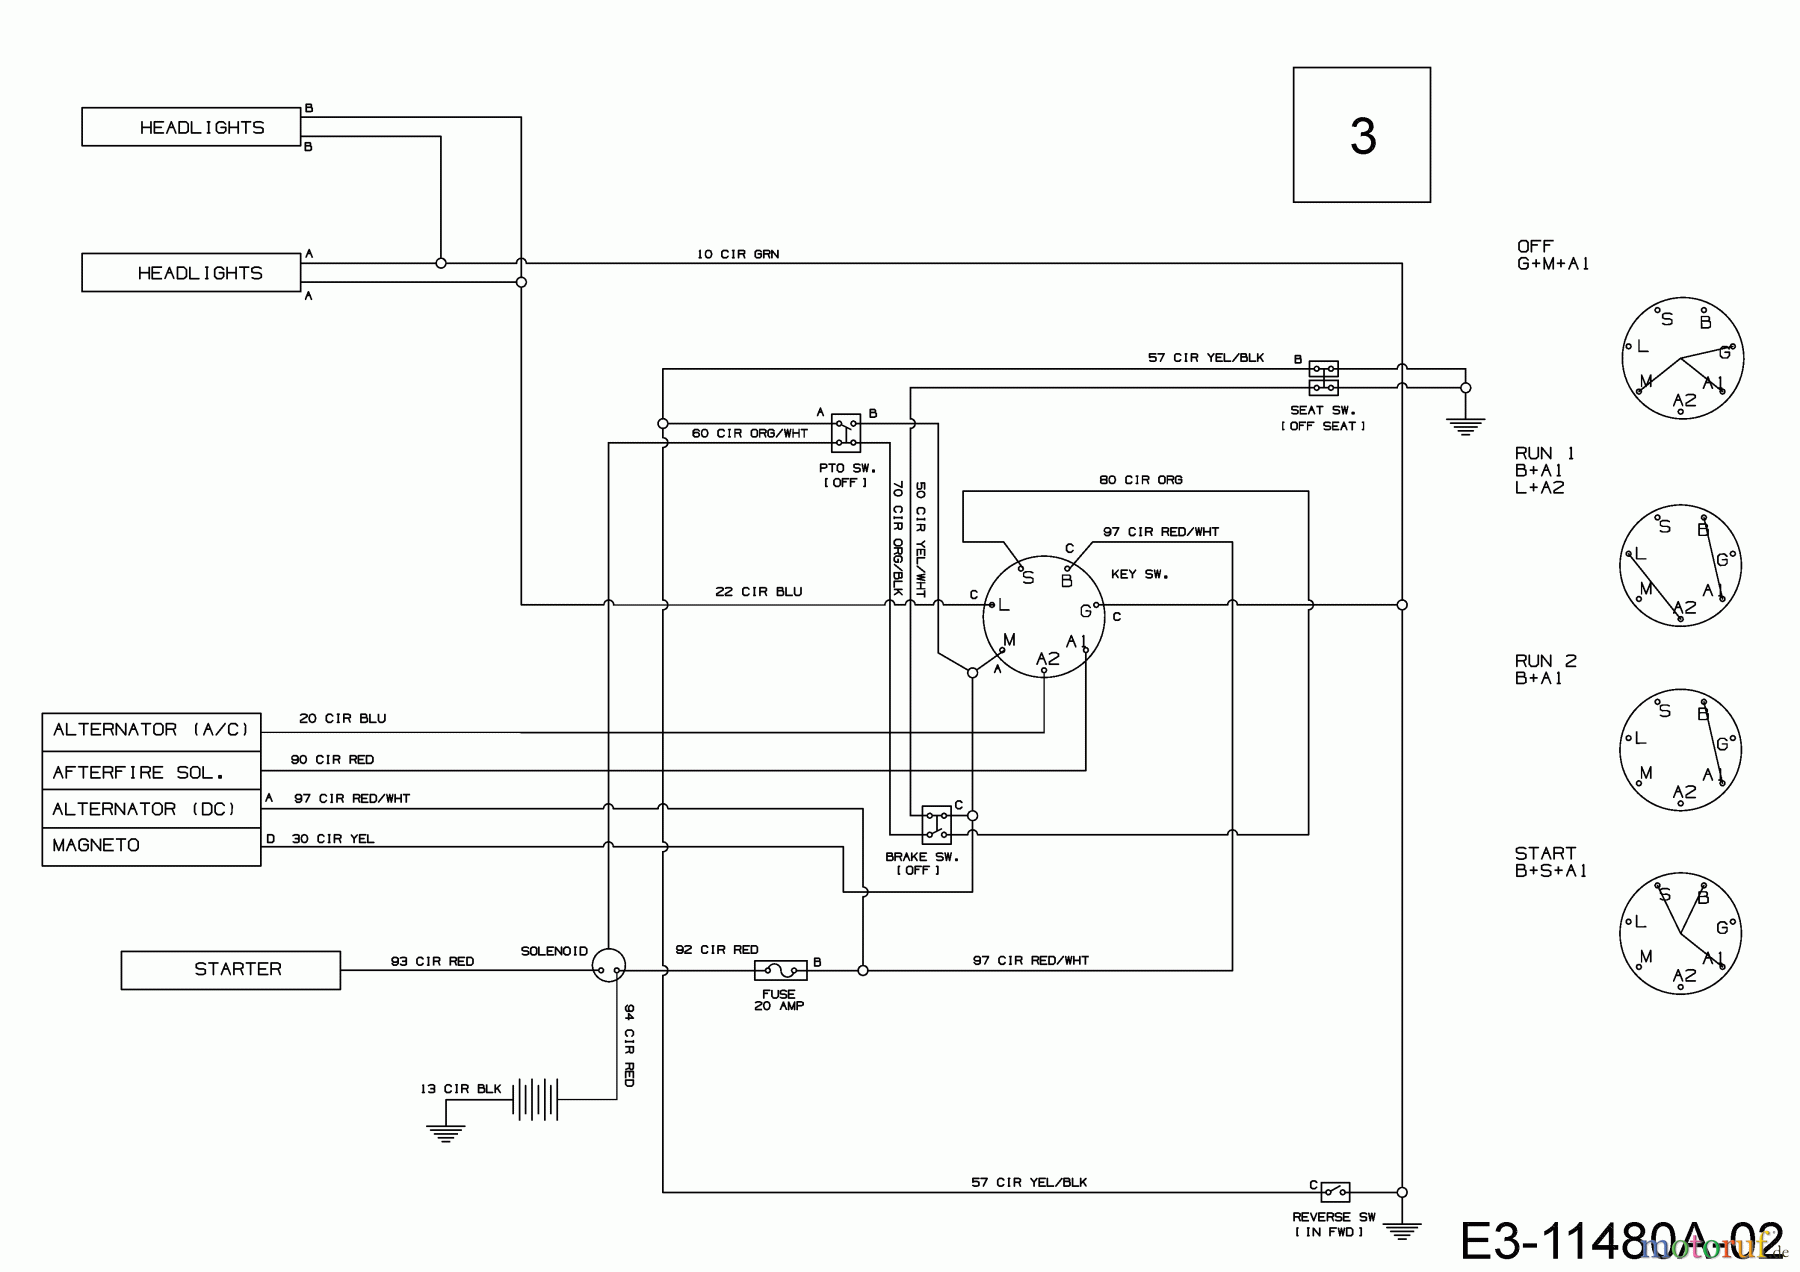  Bestgreen Lawn tractors BG 96 SBK 13B776SF655 (2021) Wiring diagram